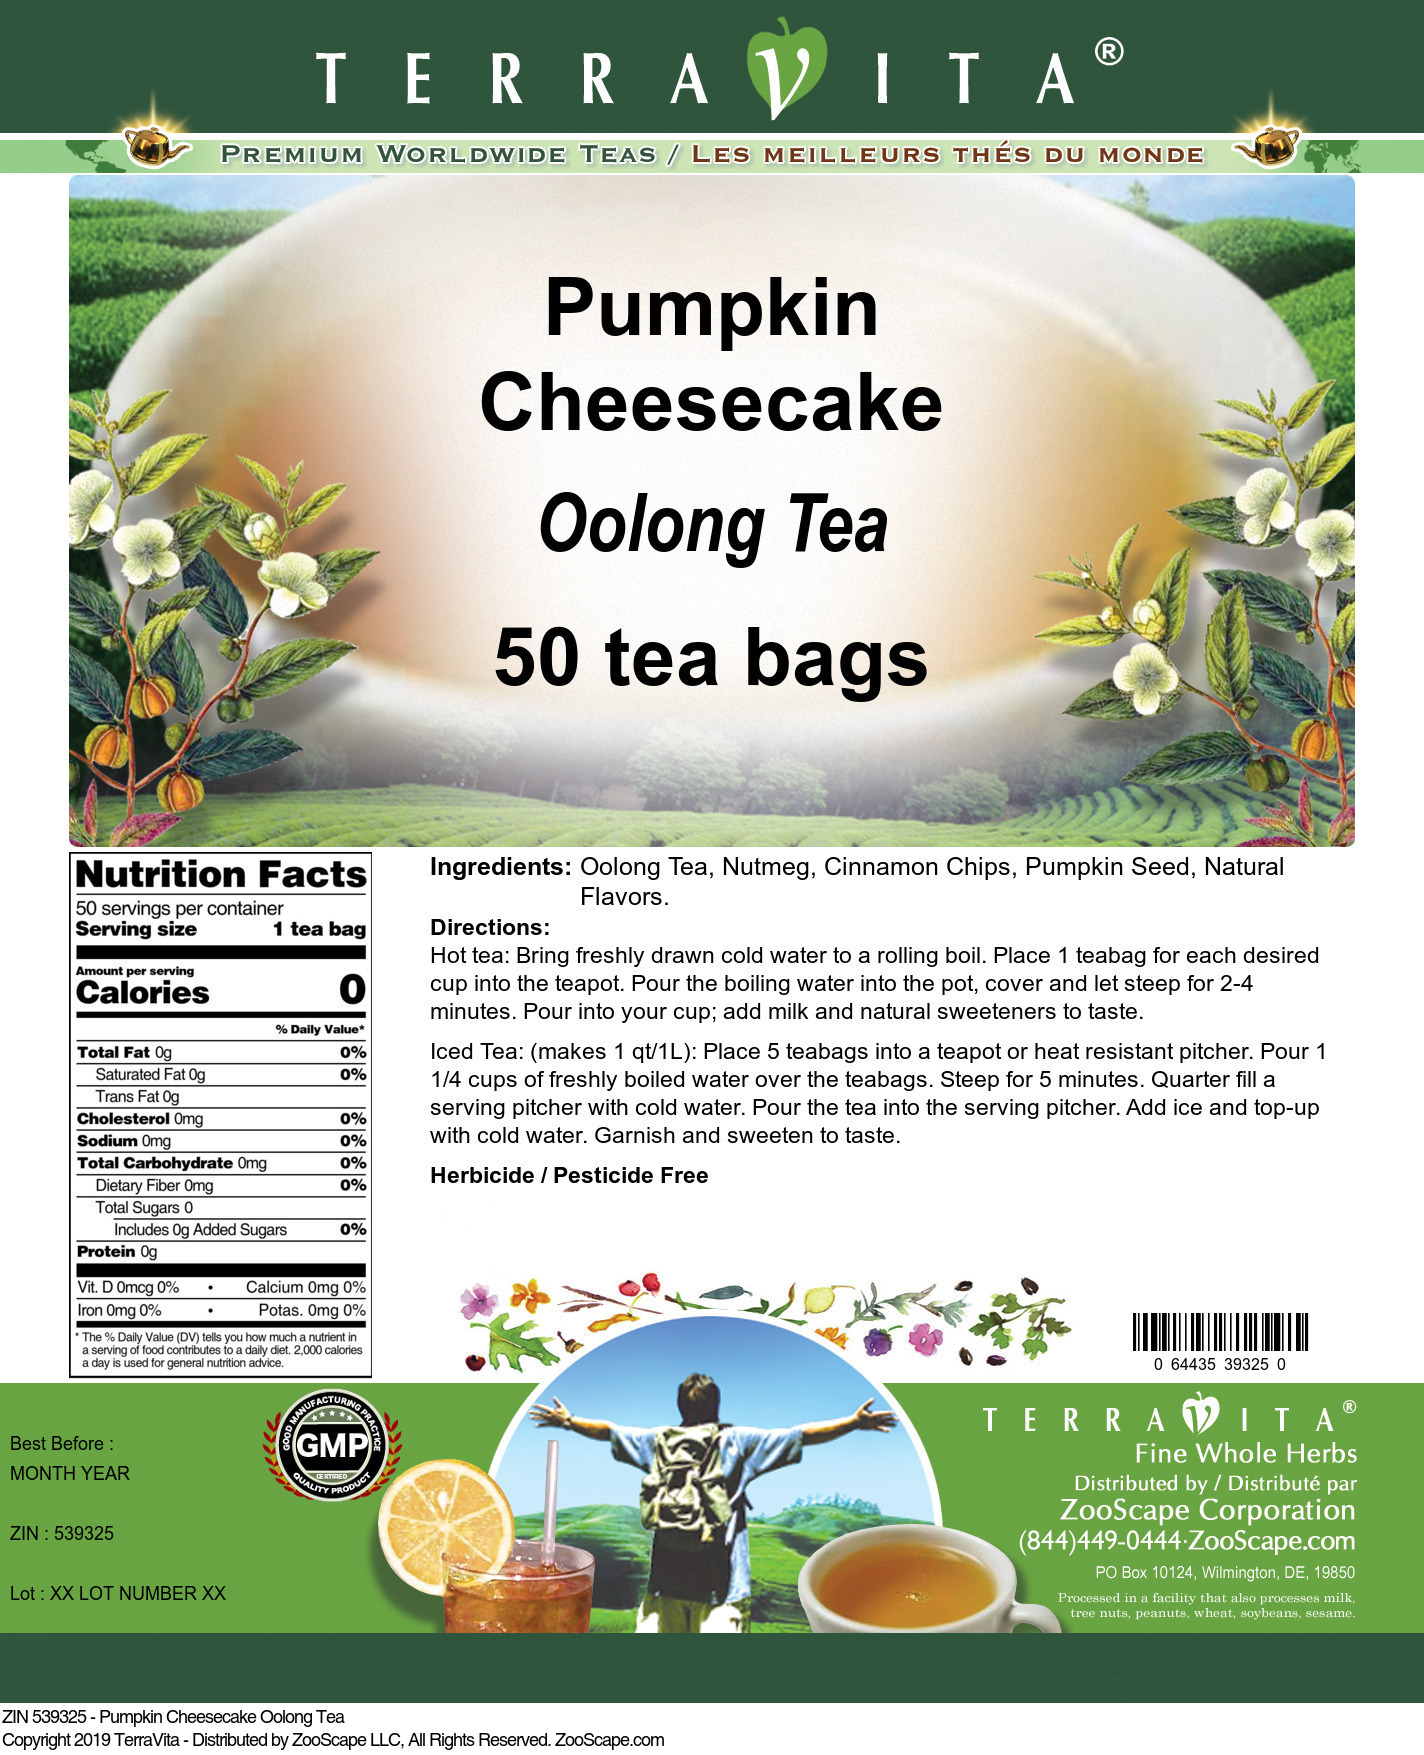 Pumpkin Cheesecake Oolong Tea - Label